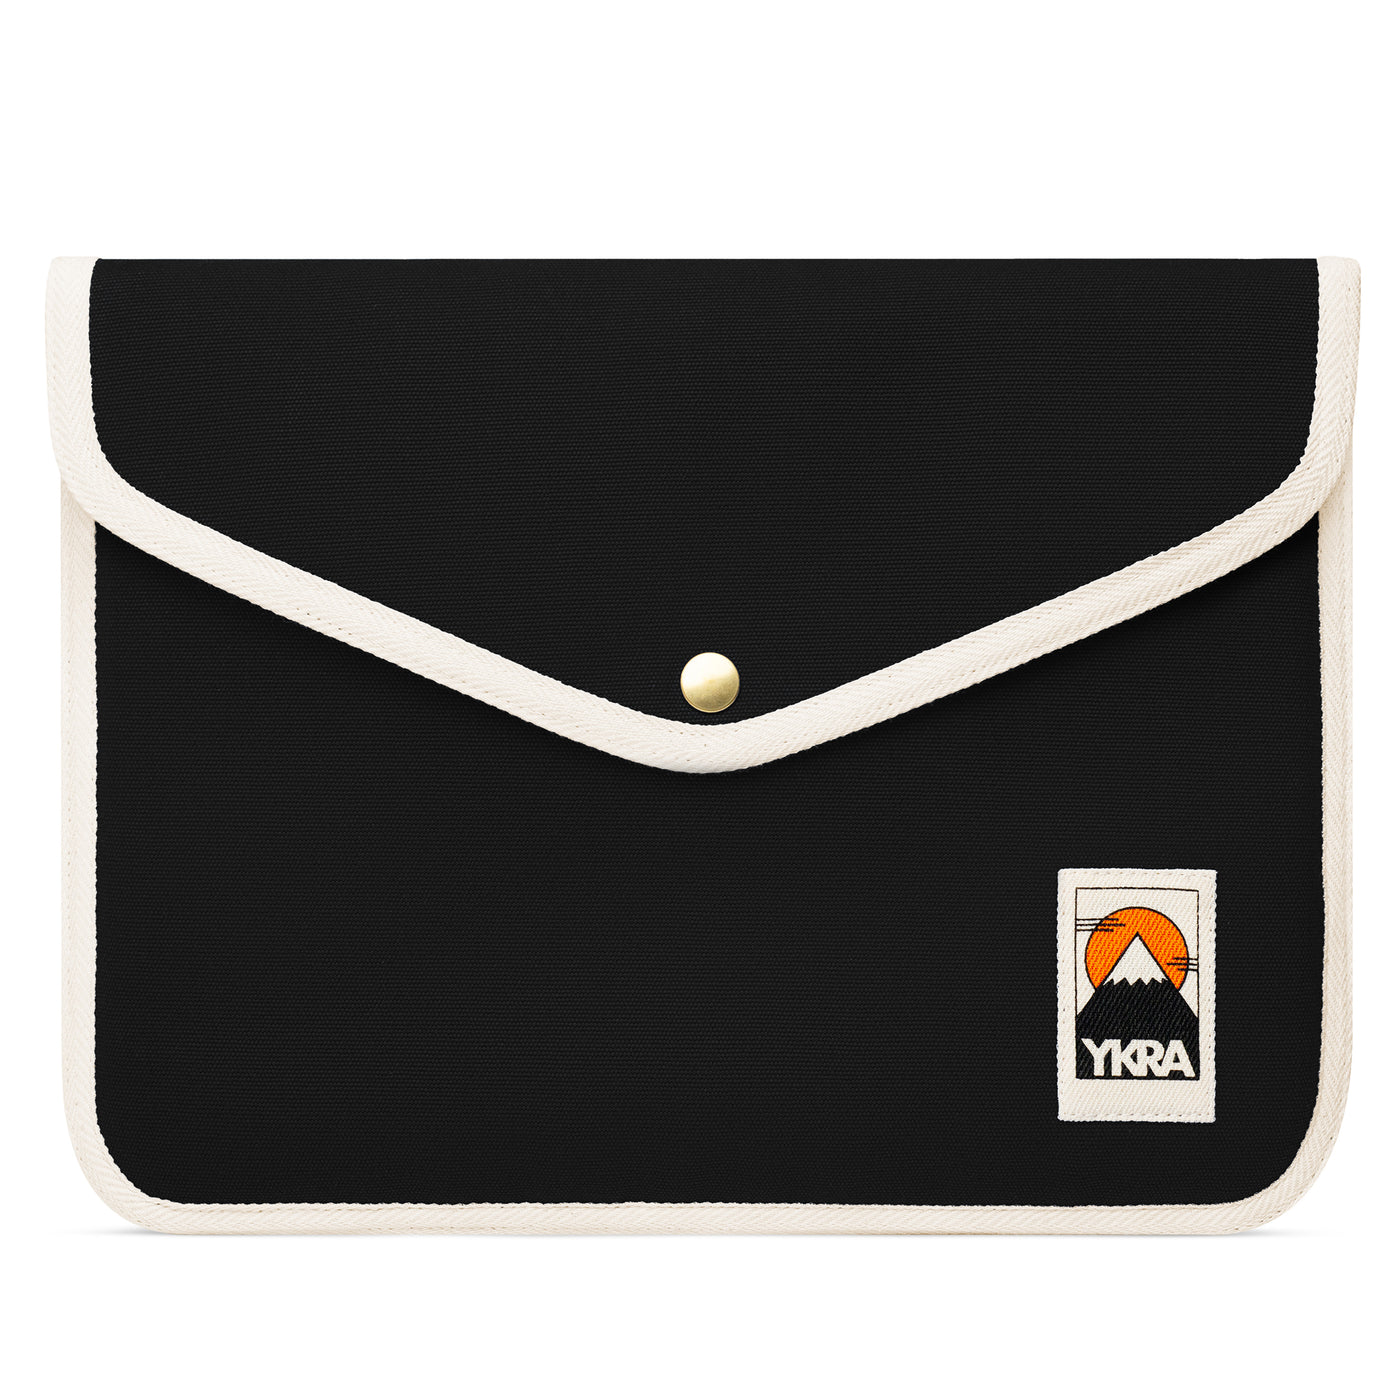 ykra laptop case small - black